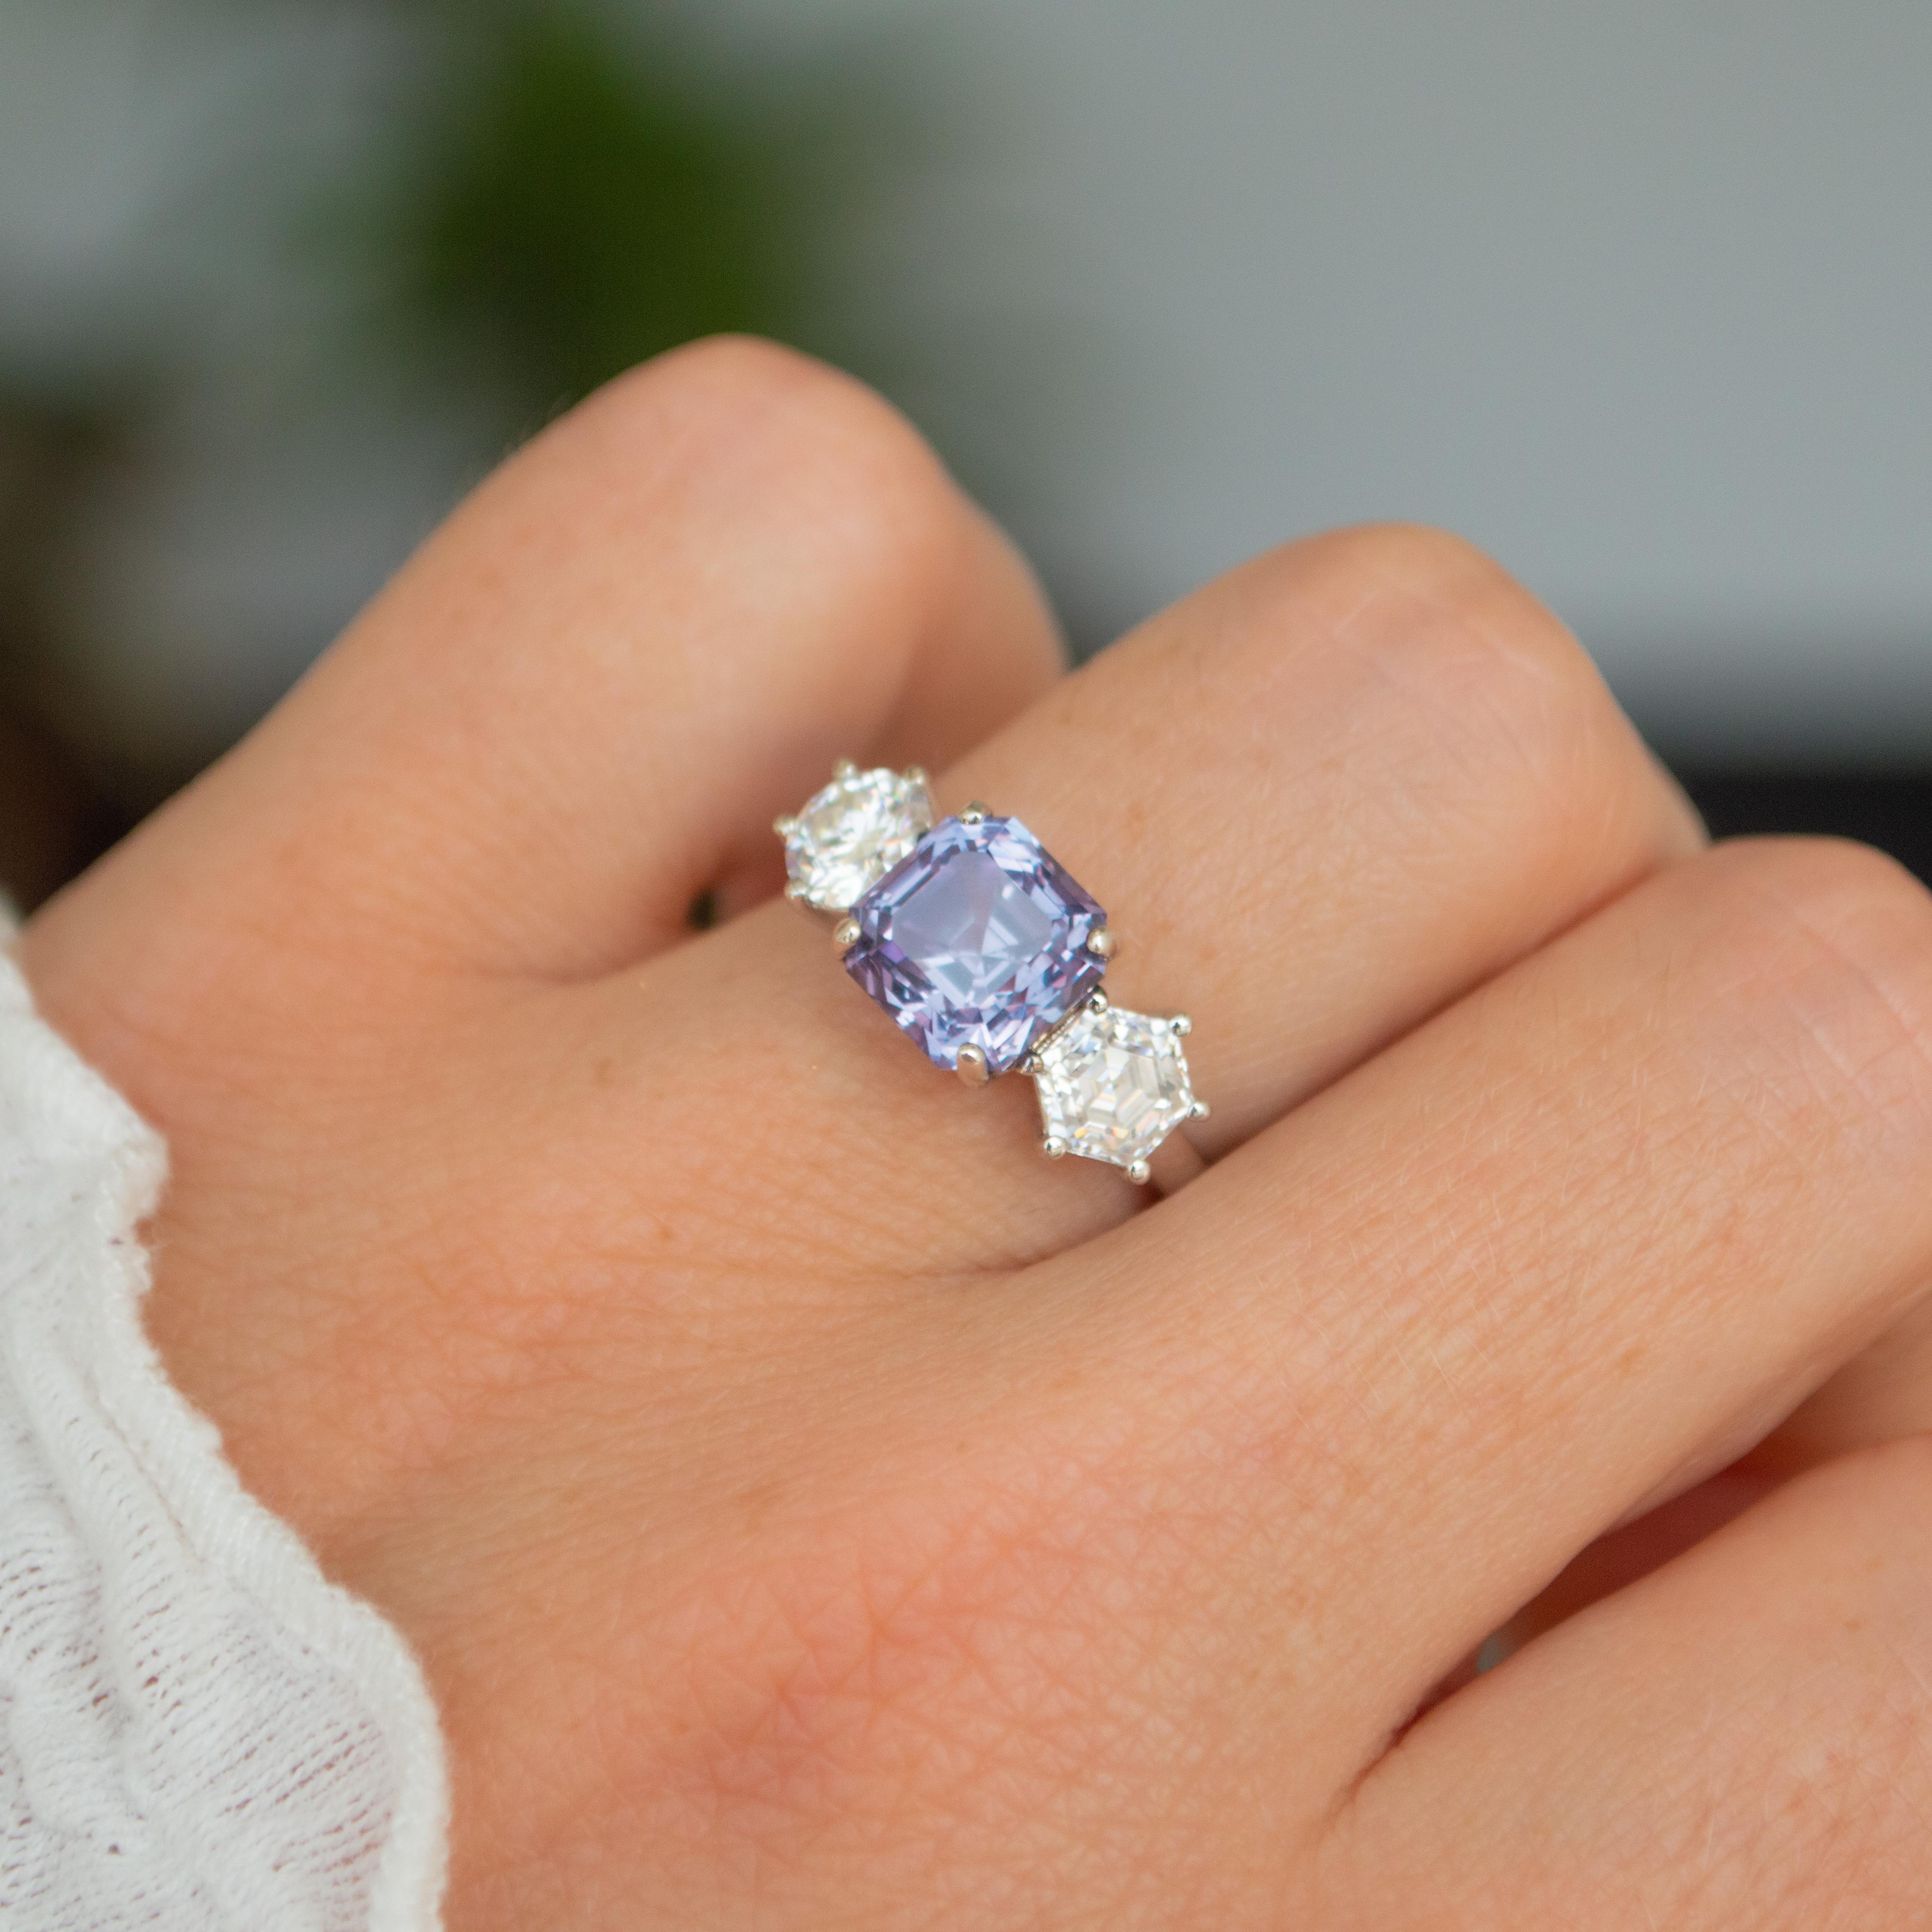 3 stone engagement ring with Asscher cut sapphire with hexagonal cut diamonds